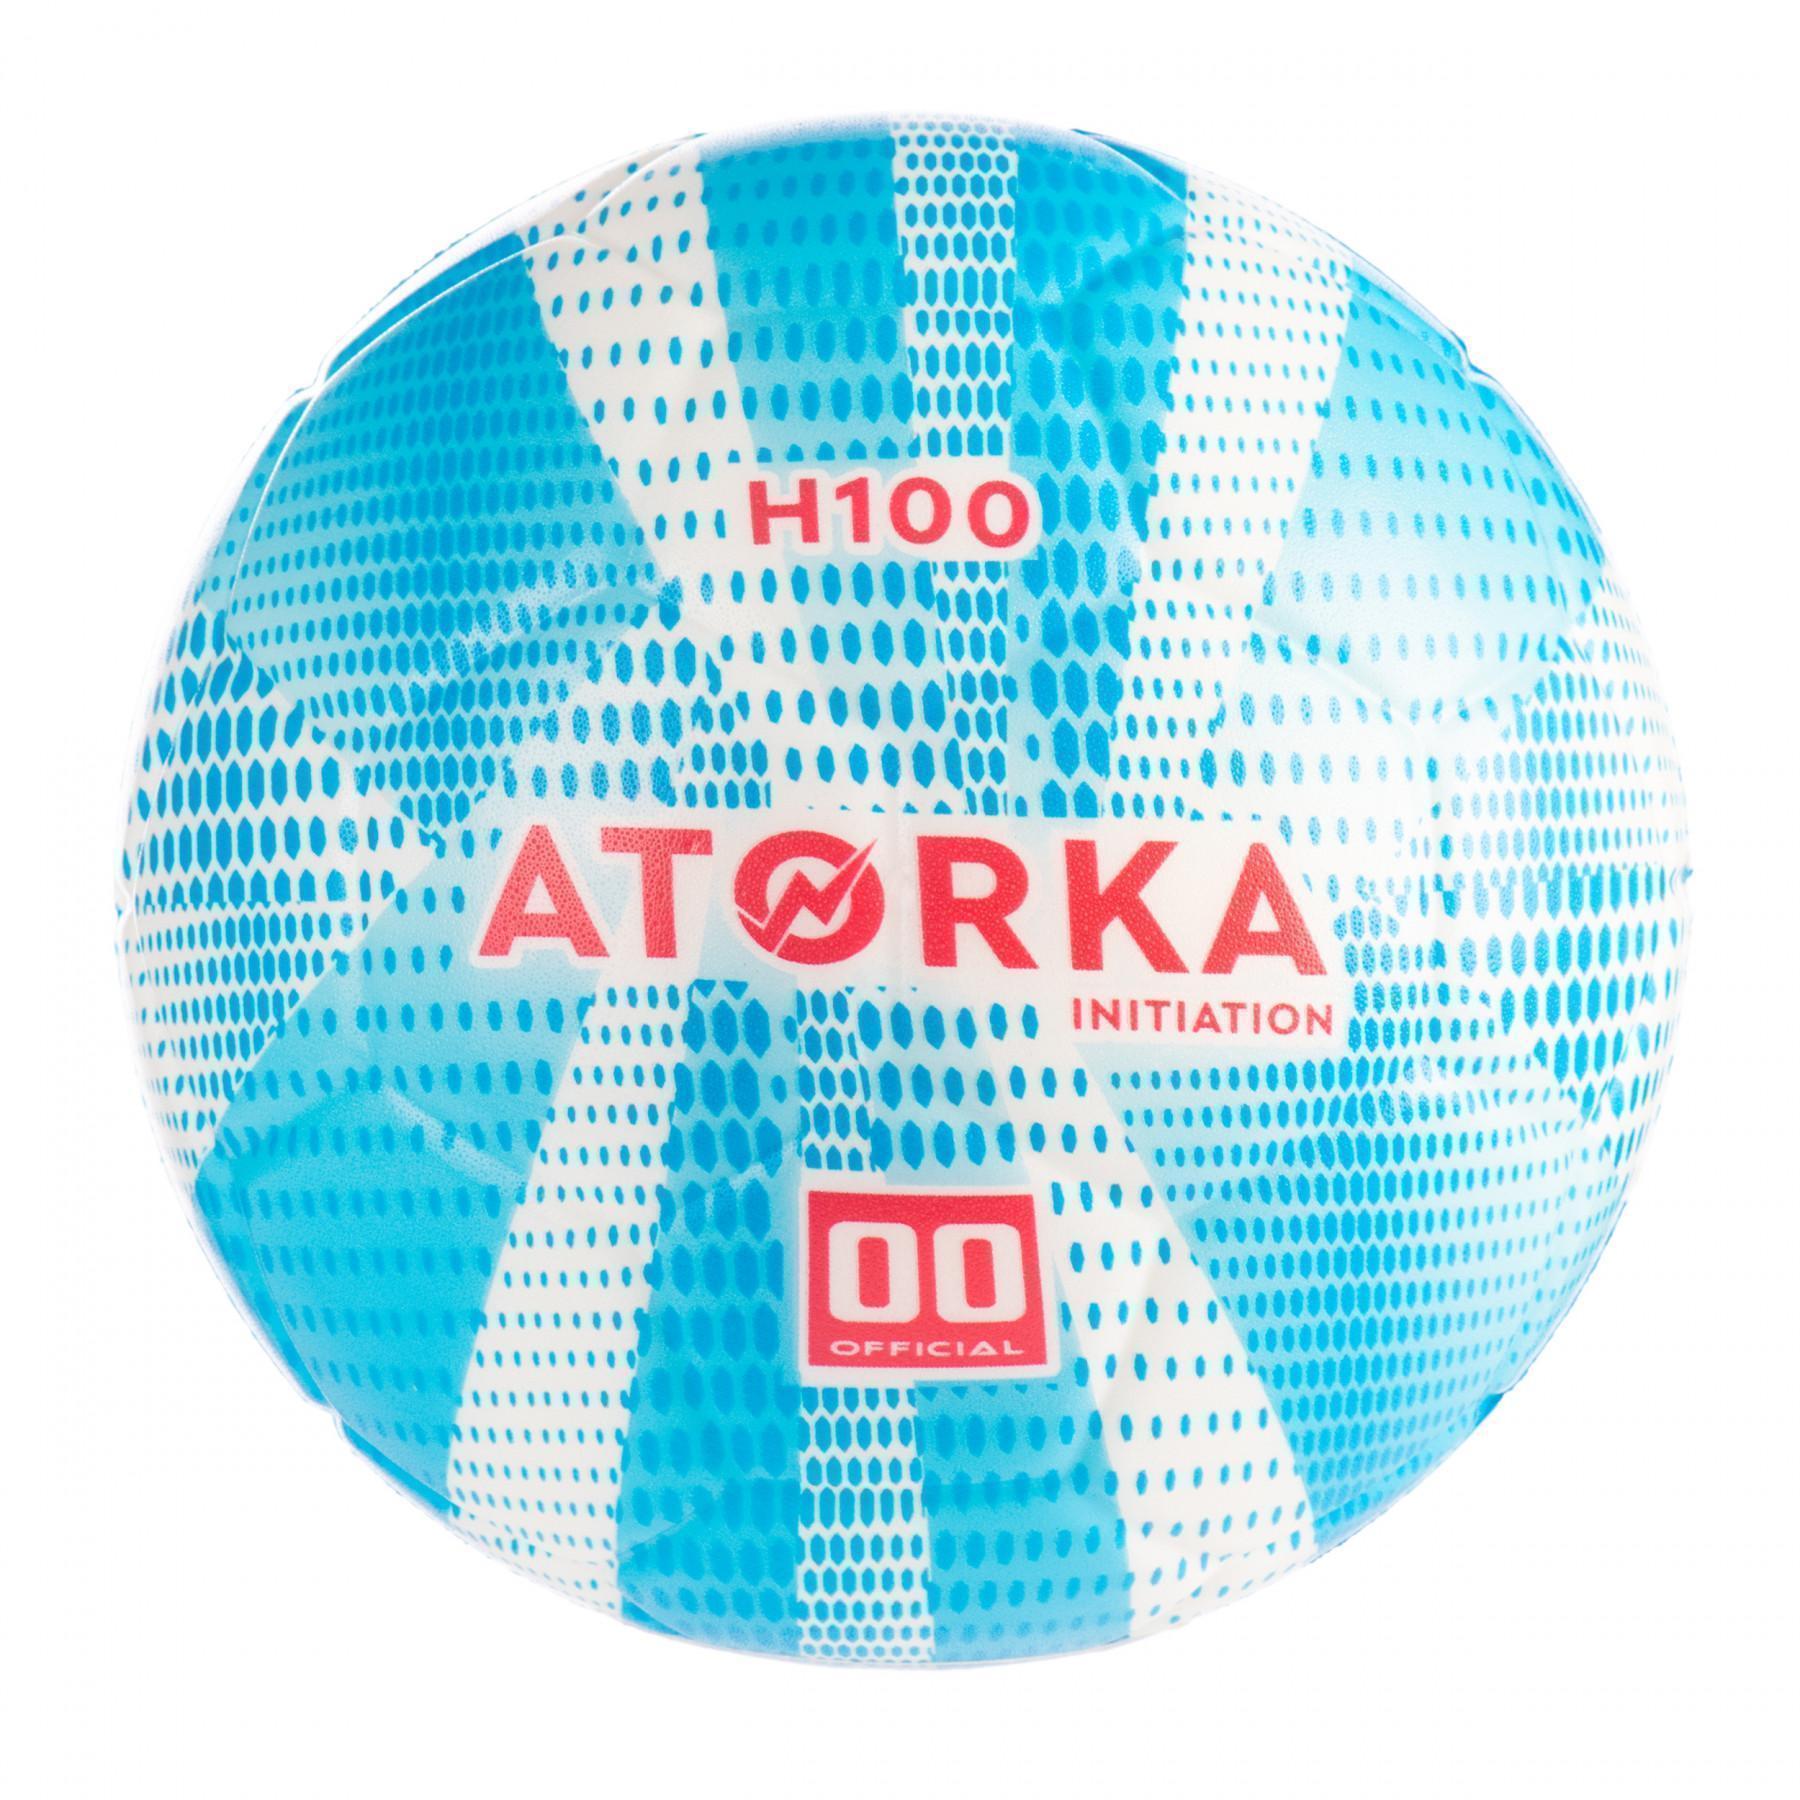 Pallone per bambini Atorka H100 INITIATION